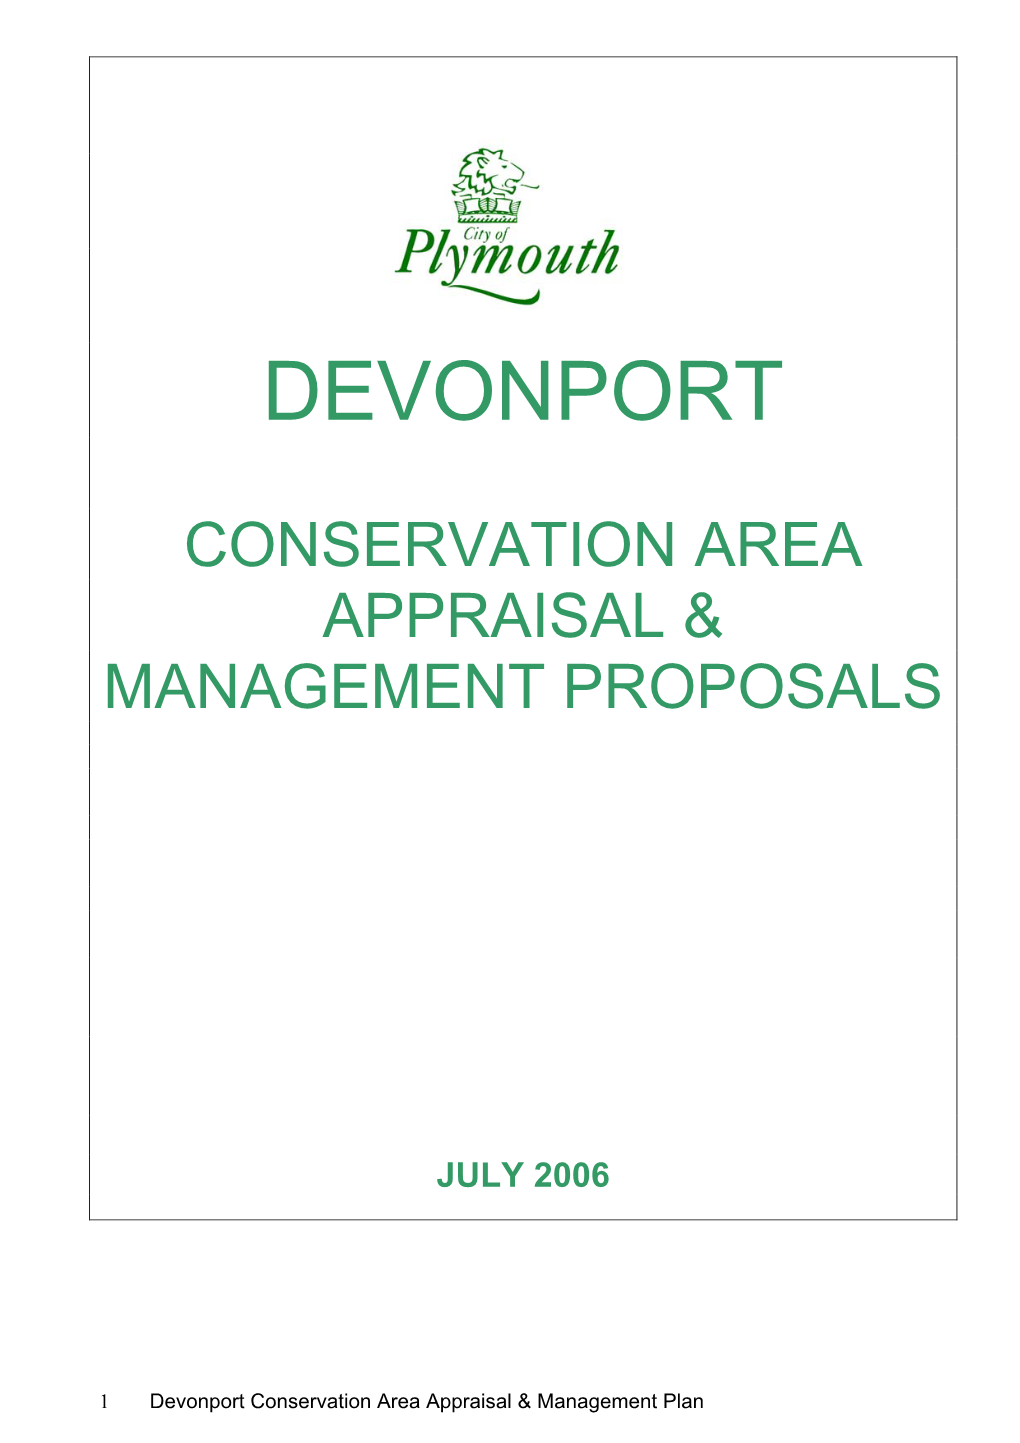 Devonport Conservation Area Appraisal and Management Proposals